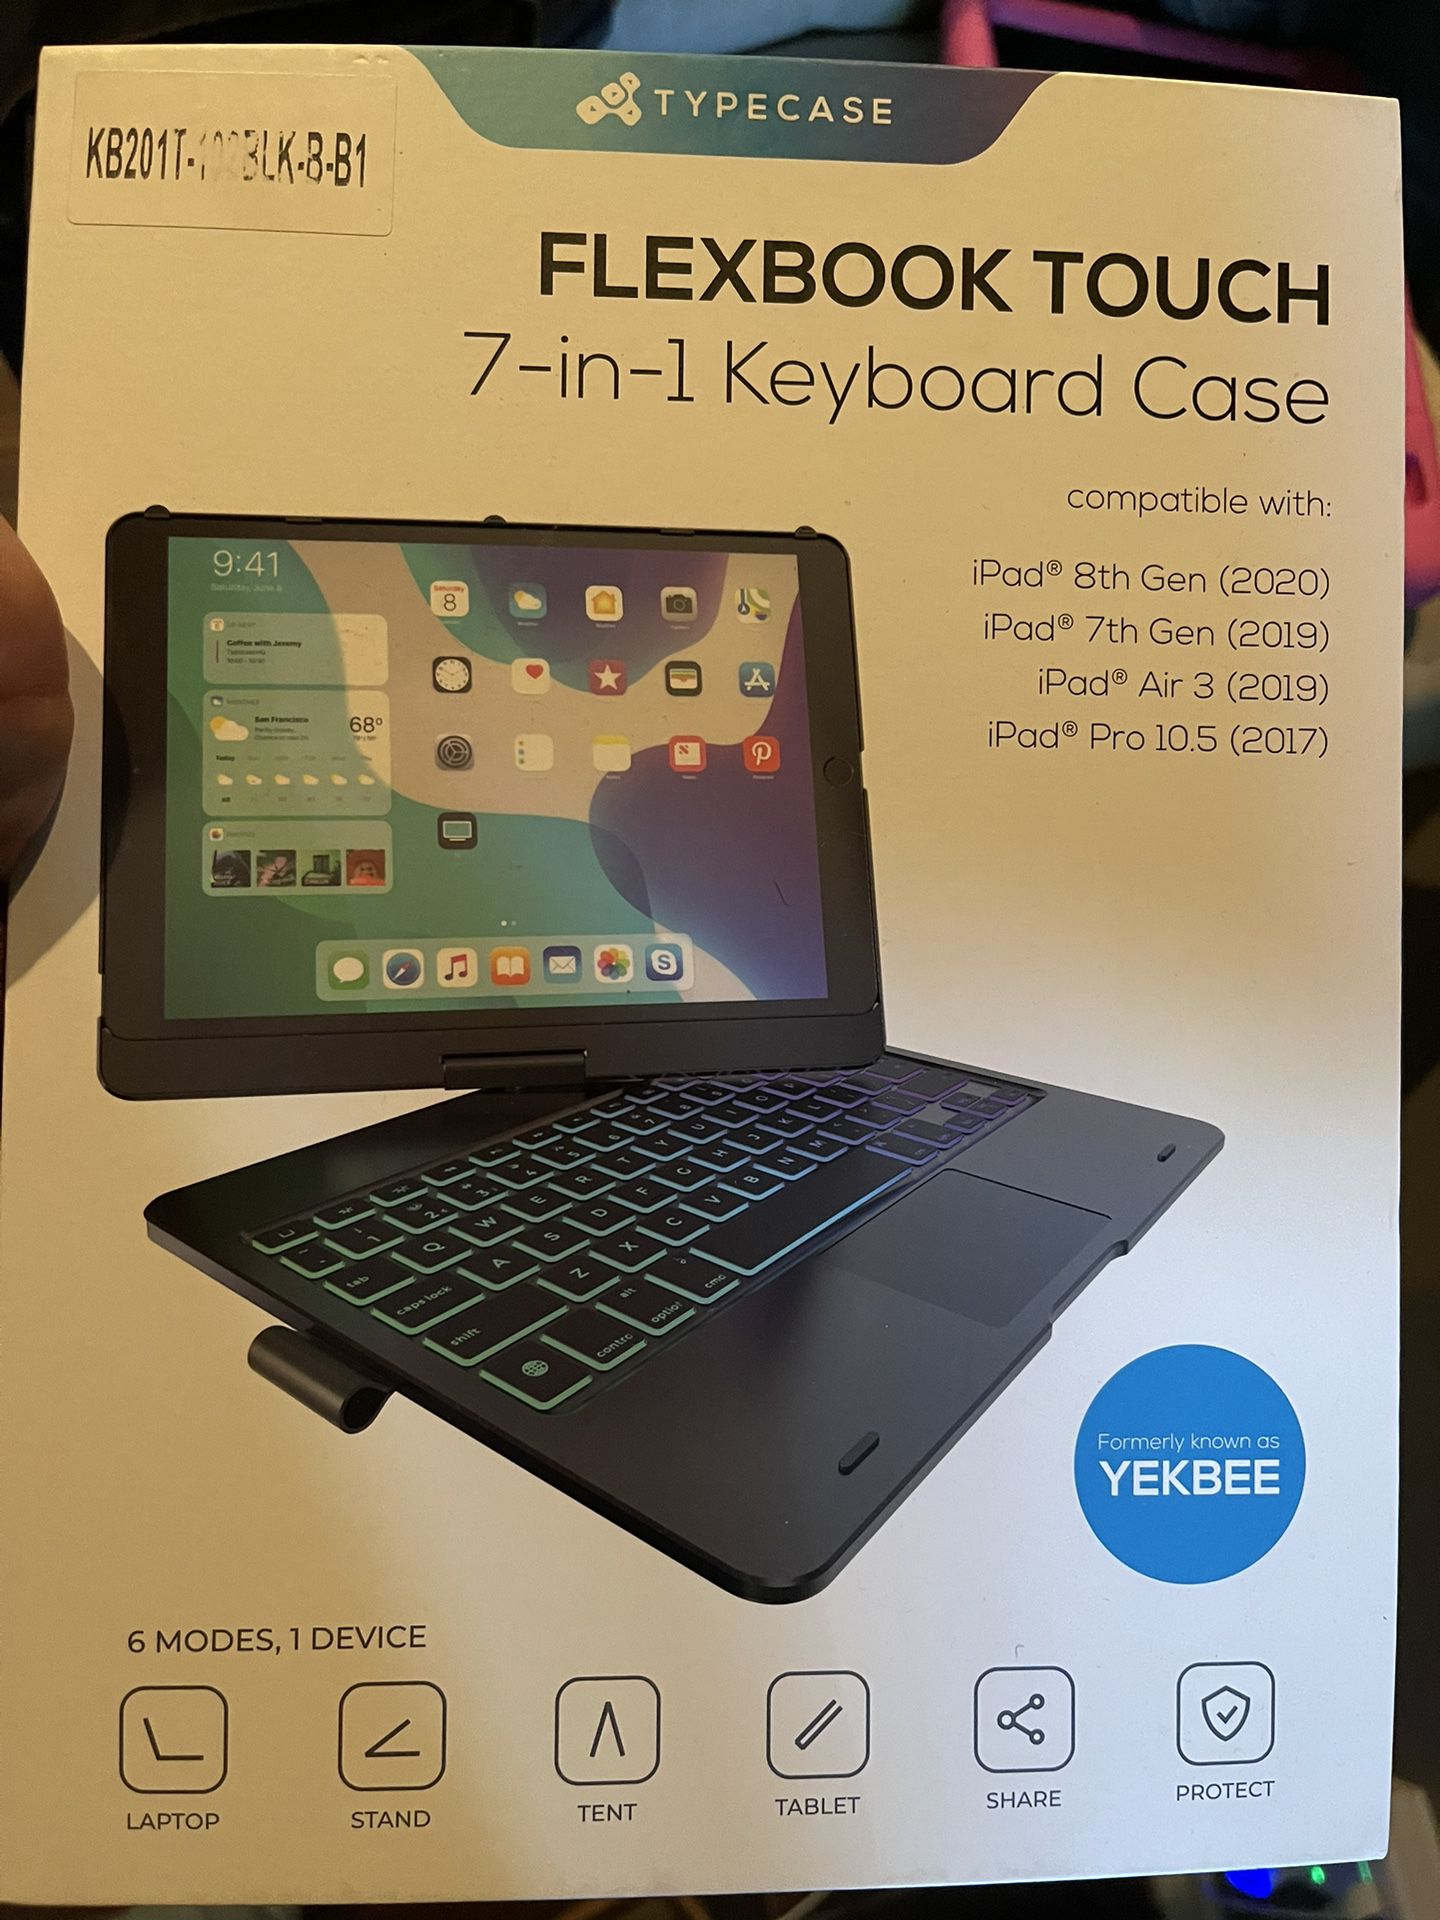 iPad Flex book 7in1 Keyboard Case 